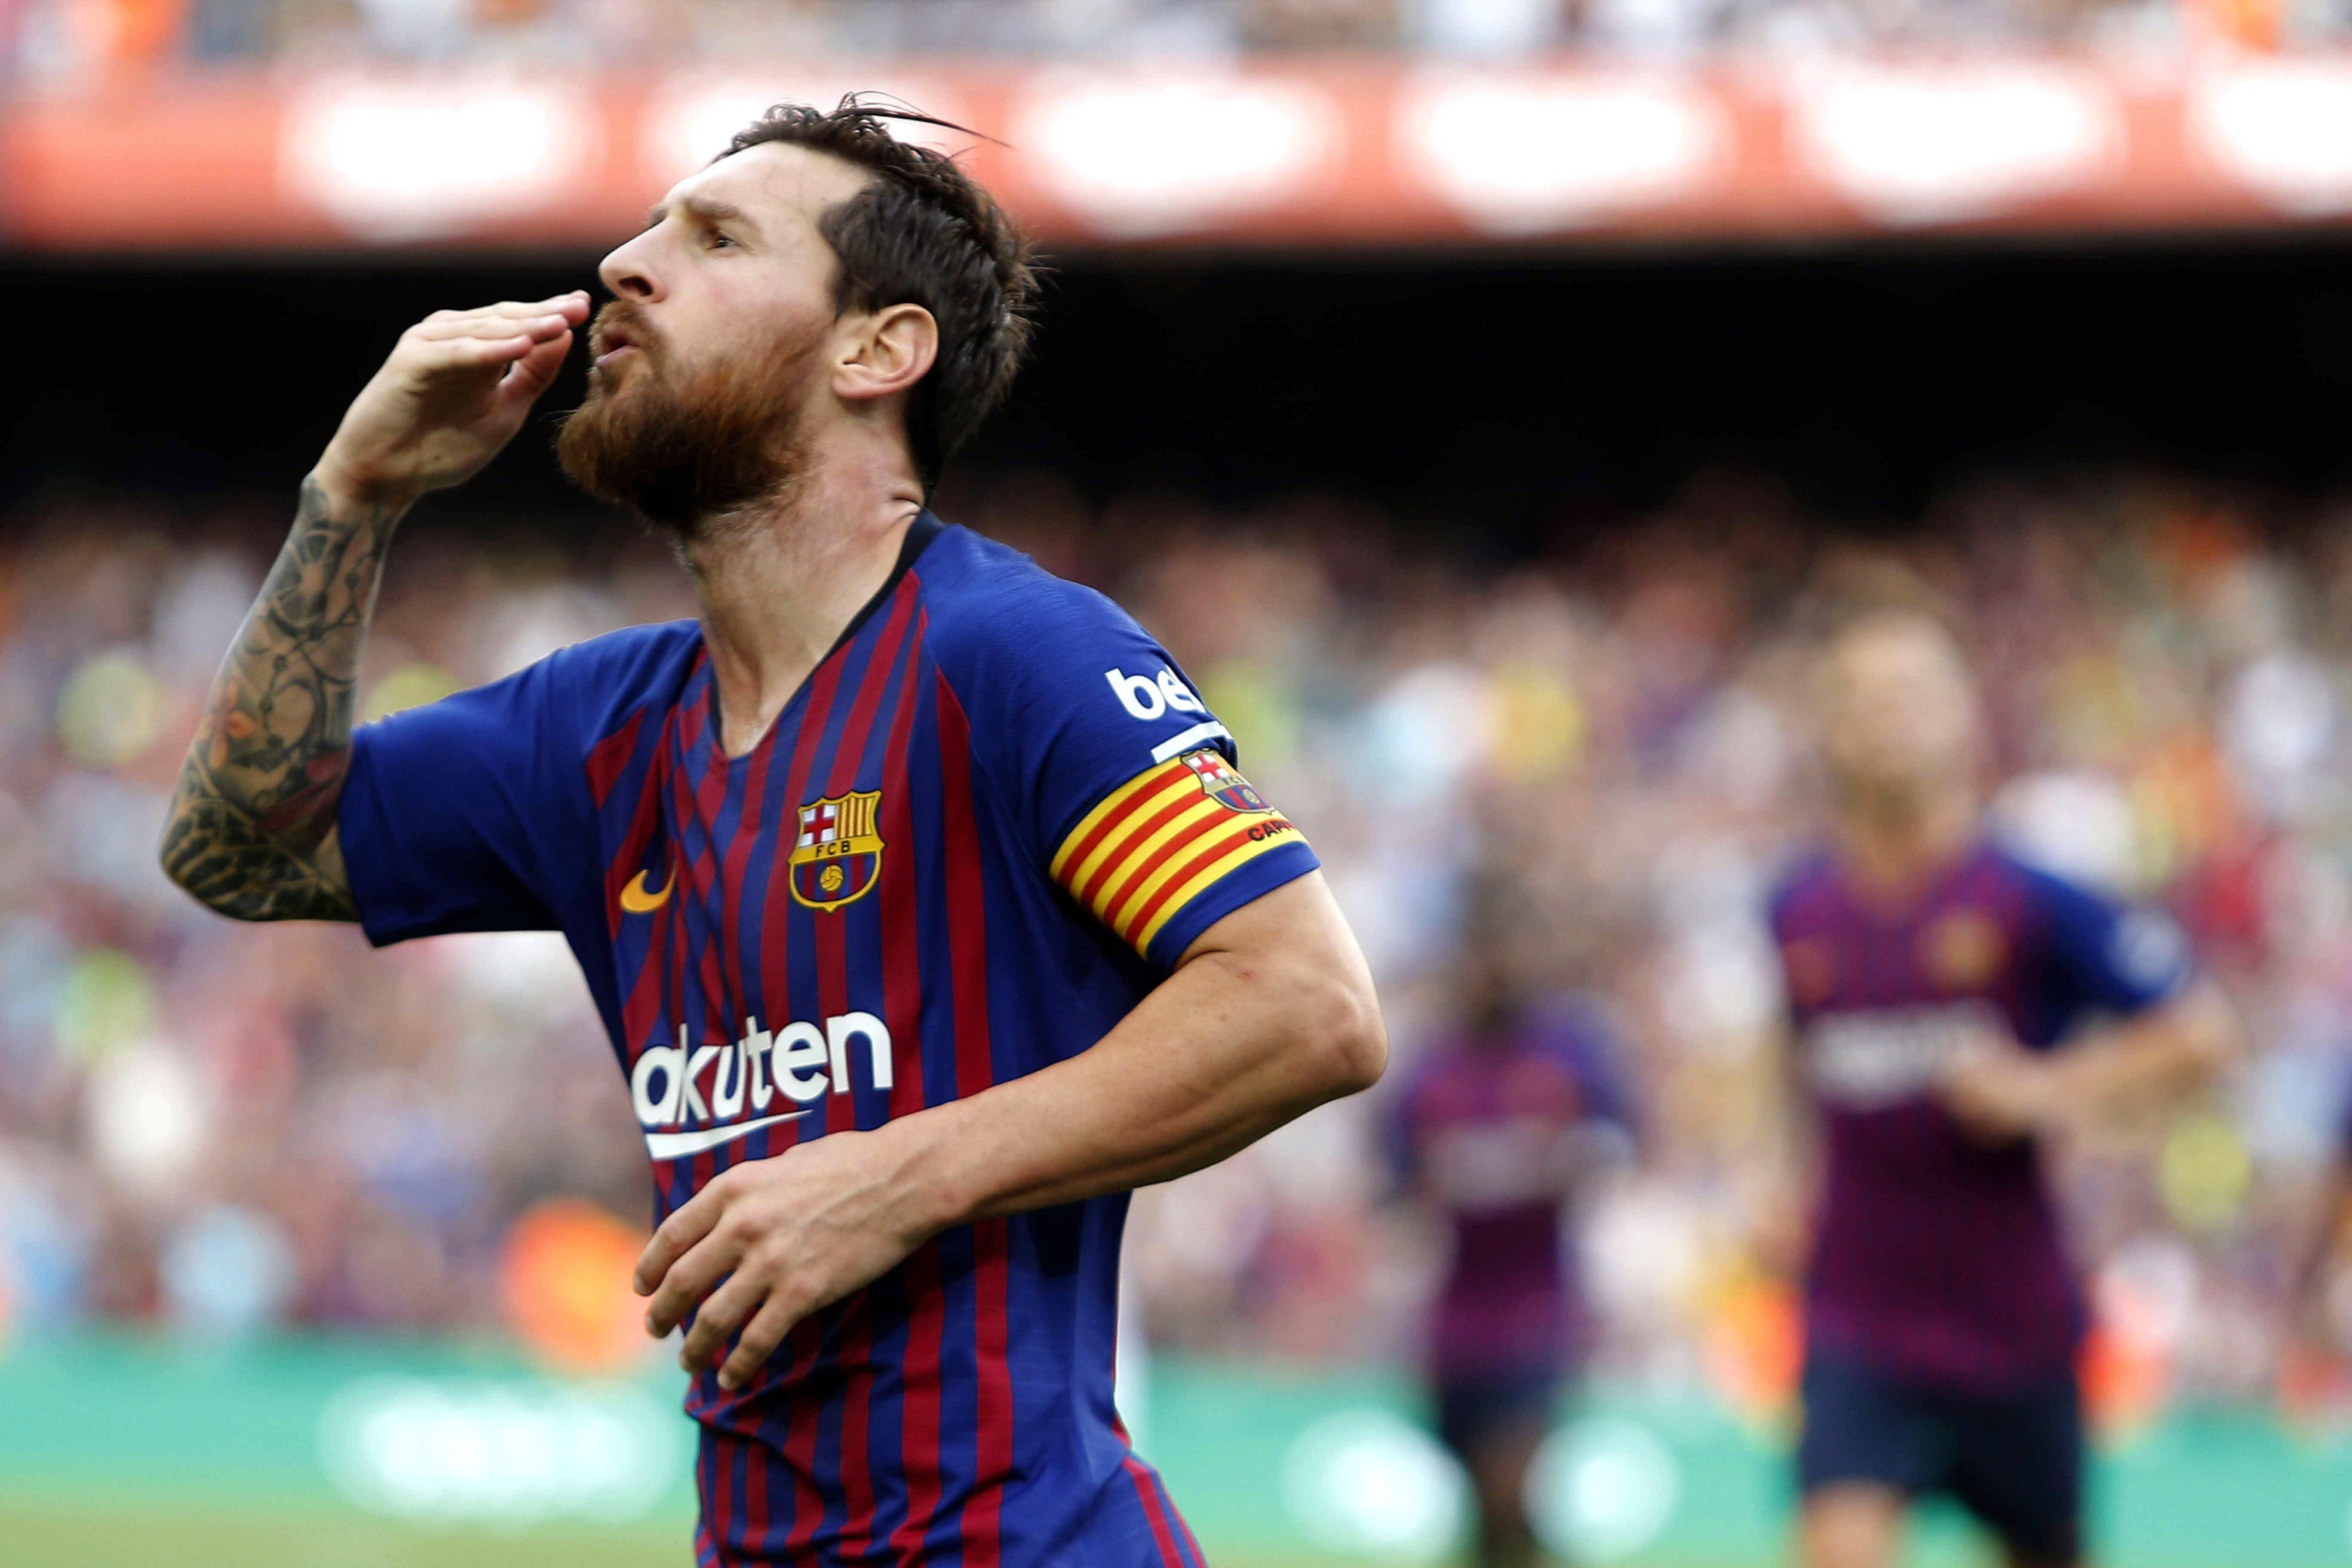 Leo Messi manda un beso tras marcar un gol / EFE